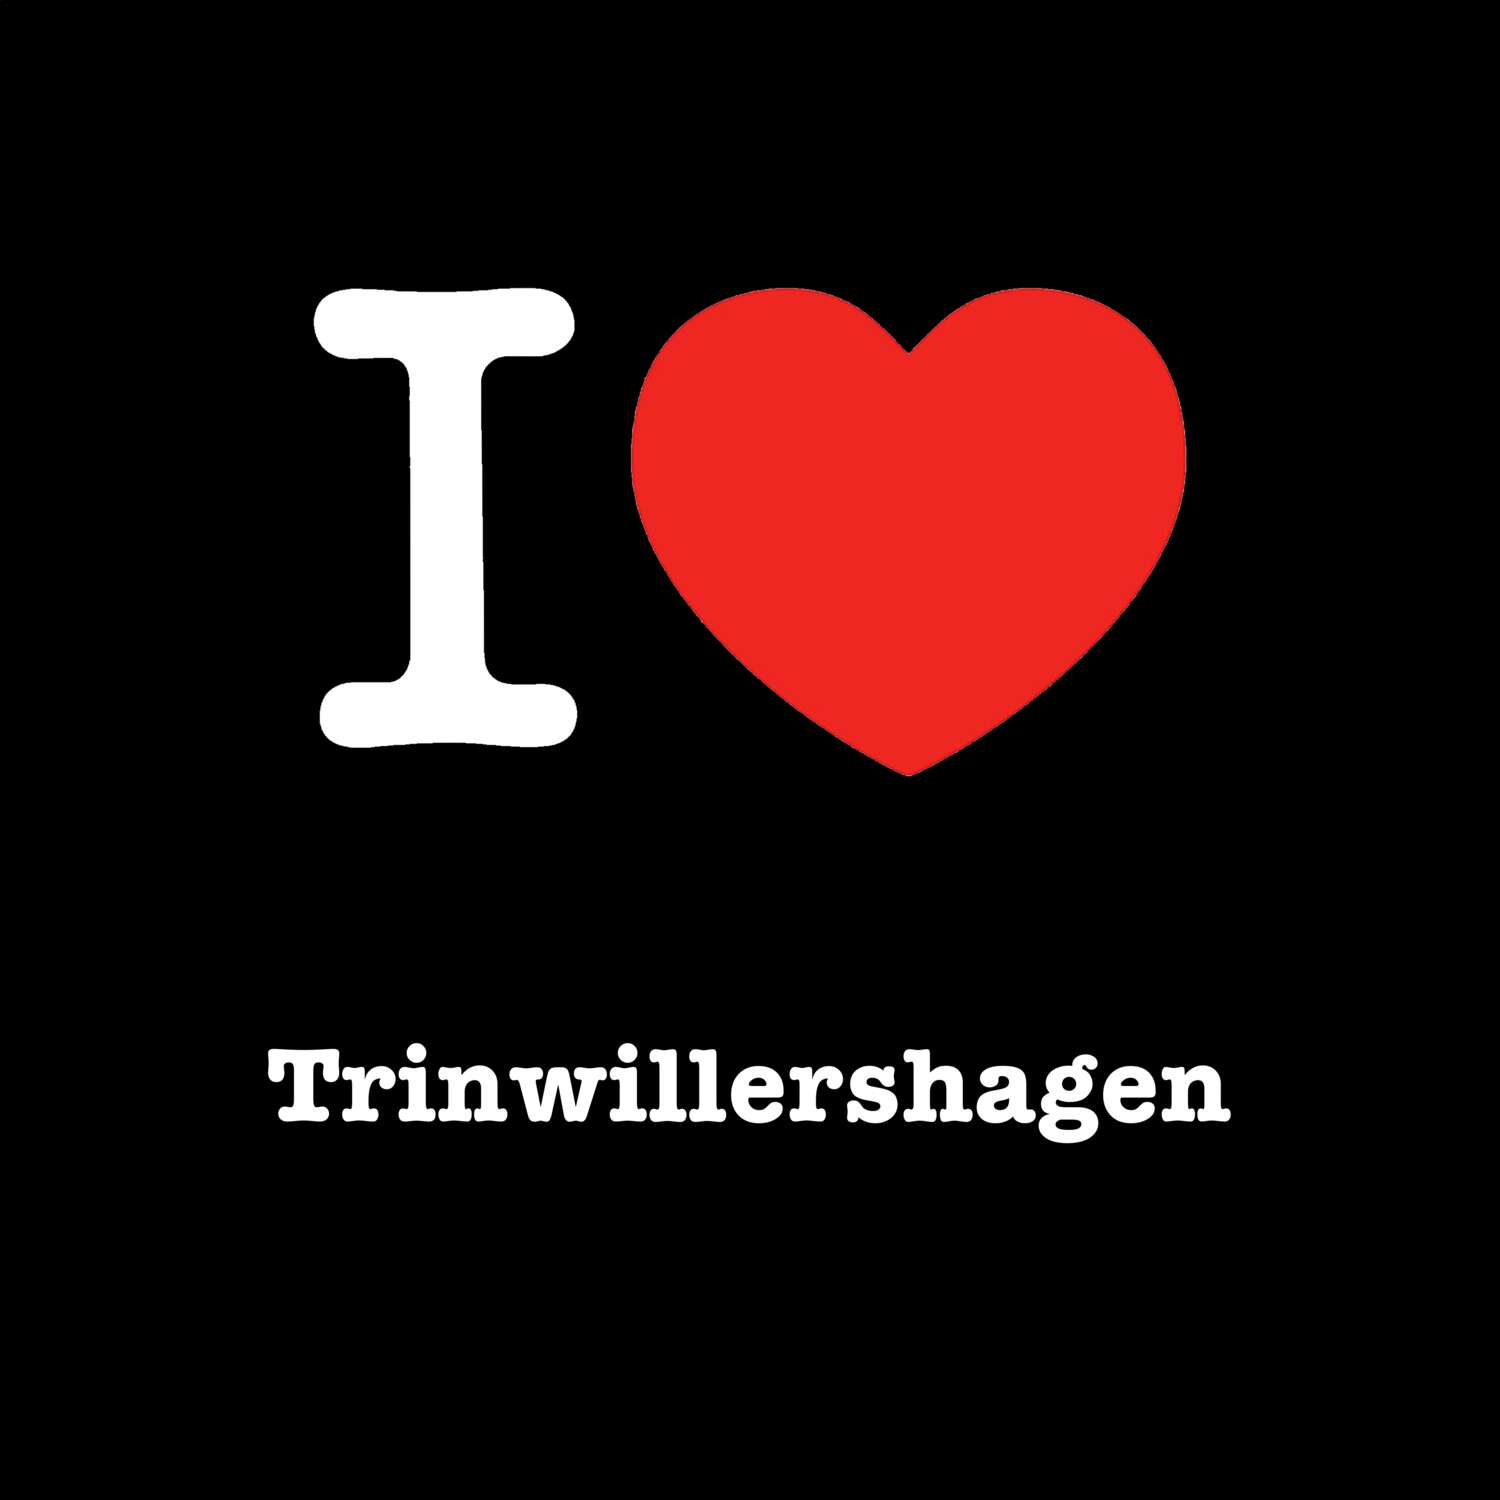 Trinwillershagen T-Shirt »I love«